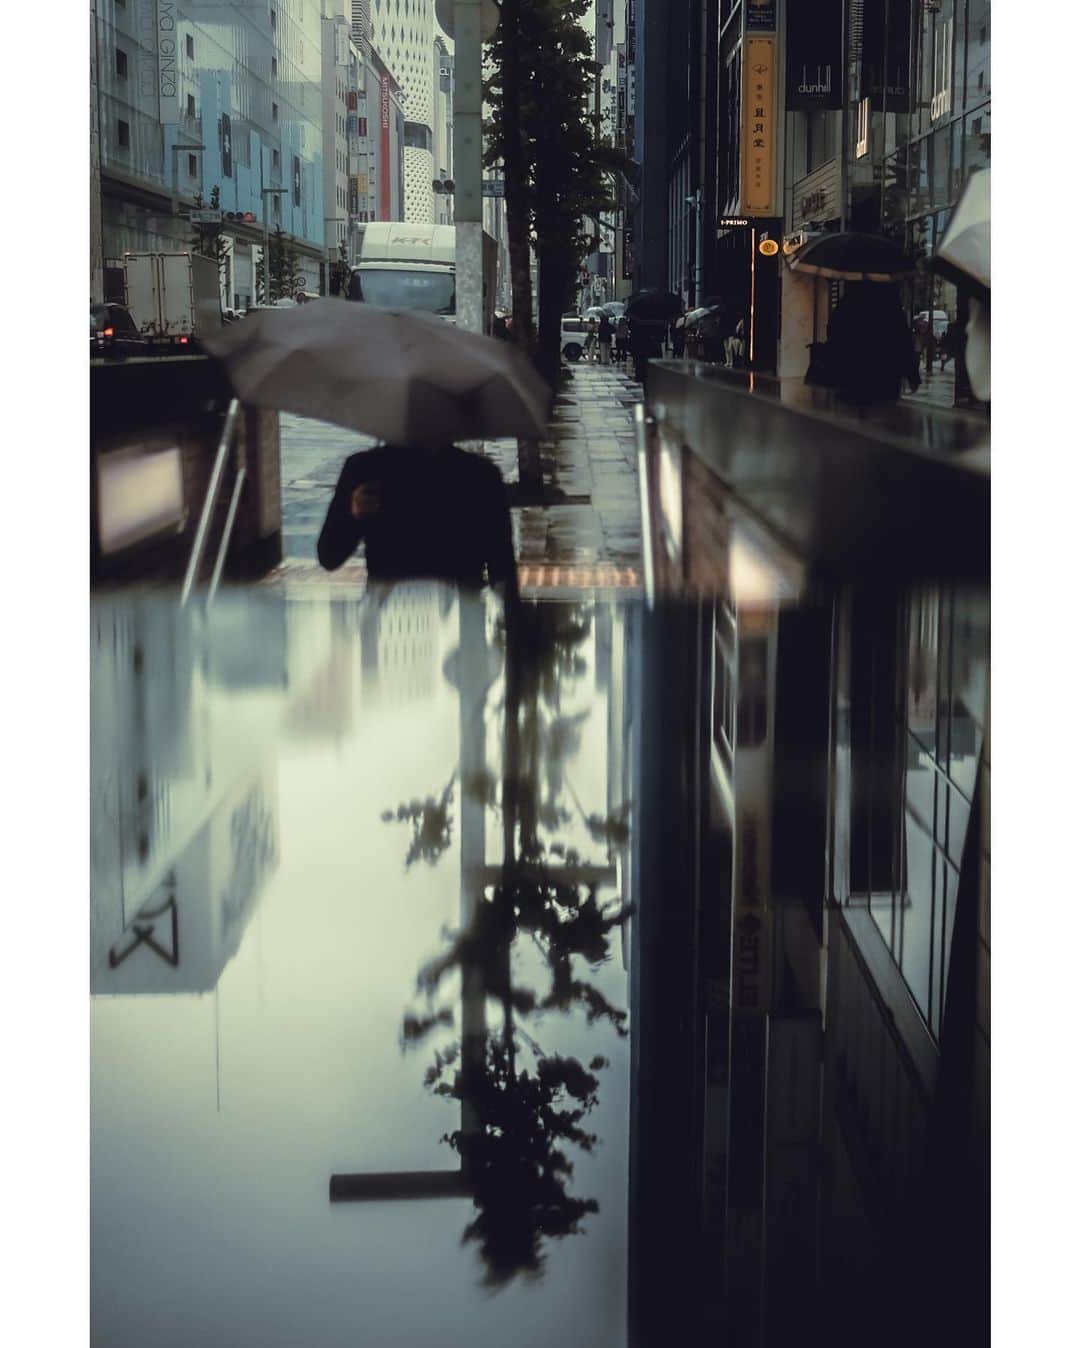 kazhixのインスタグラム：「Tokyo Rhapsody  -Reflection in rainy day-  写真展で展示した作品 2nd  #fujifilm_xseries #今日もx日和 #富士フイルム  #FUJIFILM #instagram  #igersjp #HelloFrom Tokyo #ファインダー越しの私の世界  #tokyocameraclub #mst_photo #daily_photo_jpn #tokyoartsandculture #JapanCityBlues #TokyoTokyo #streetfinder #eyephotomagazine #cinema_streets  #urbanromantix #street_avengers #streetleaks #sublimestreet #streets_storytelling #storyofthestreet #streetsgrammer #streetmoment #voidtokyo  #street_aperture #streetgrammers #shadow_magazine #subshooters」